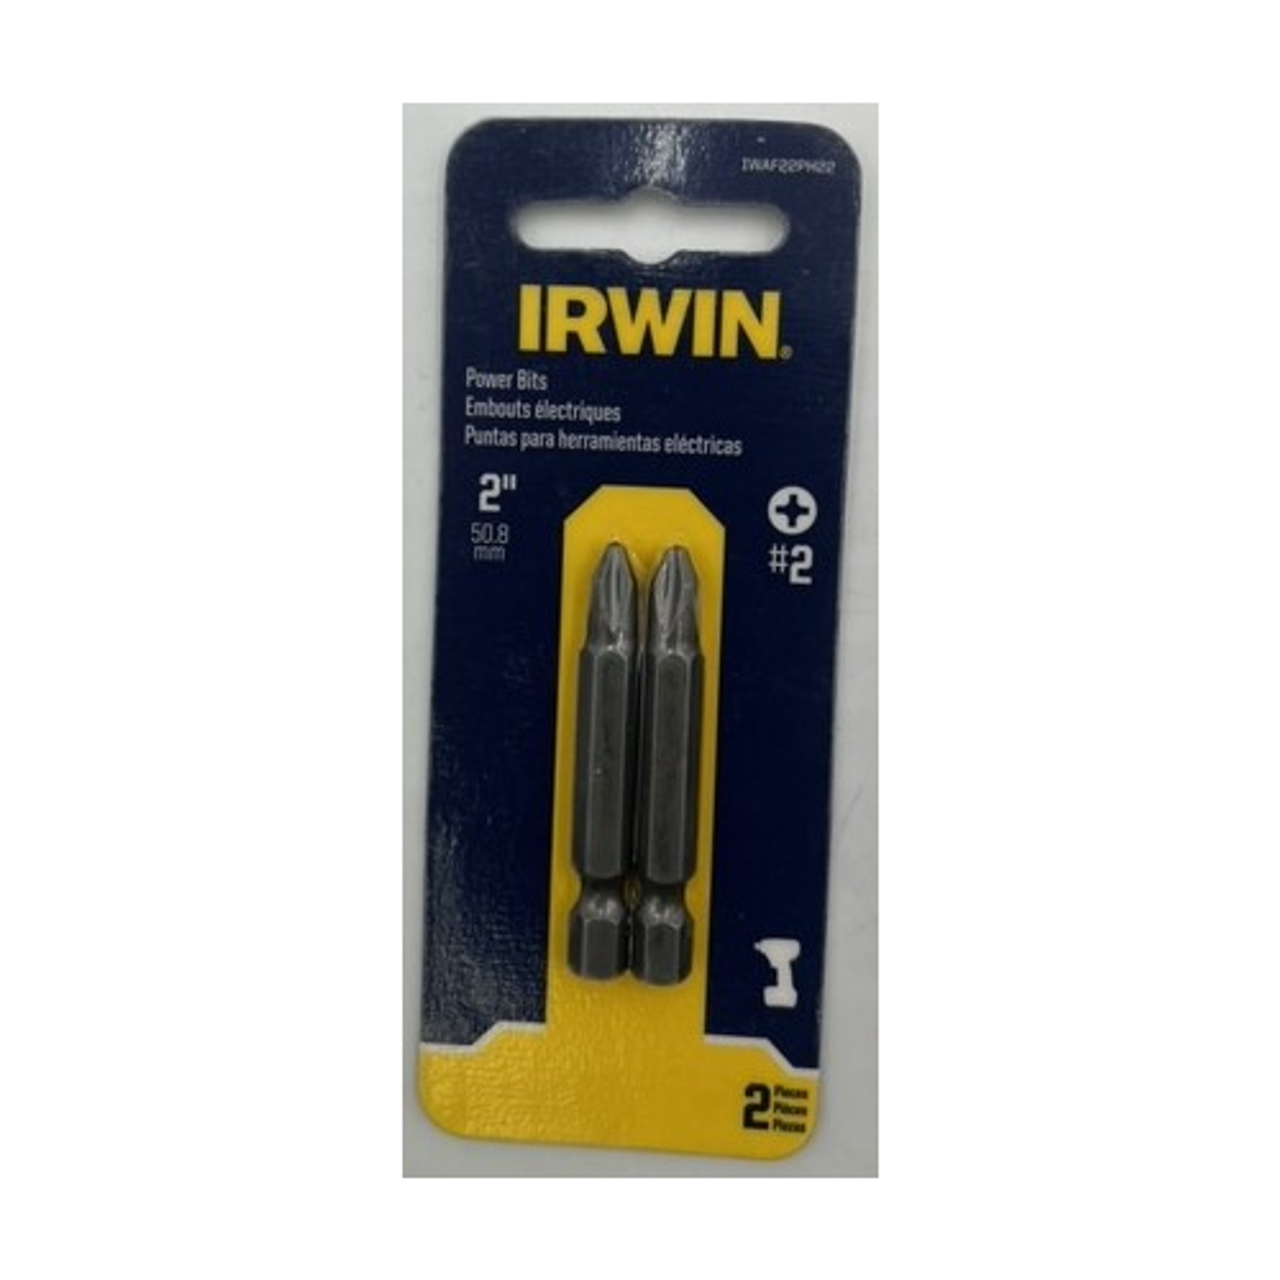 Irwin IWAF22PH22 Phillips Insert Power Bits #2 PH, 2 inch - 2 pack